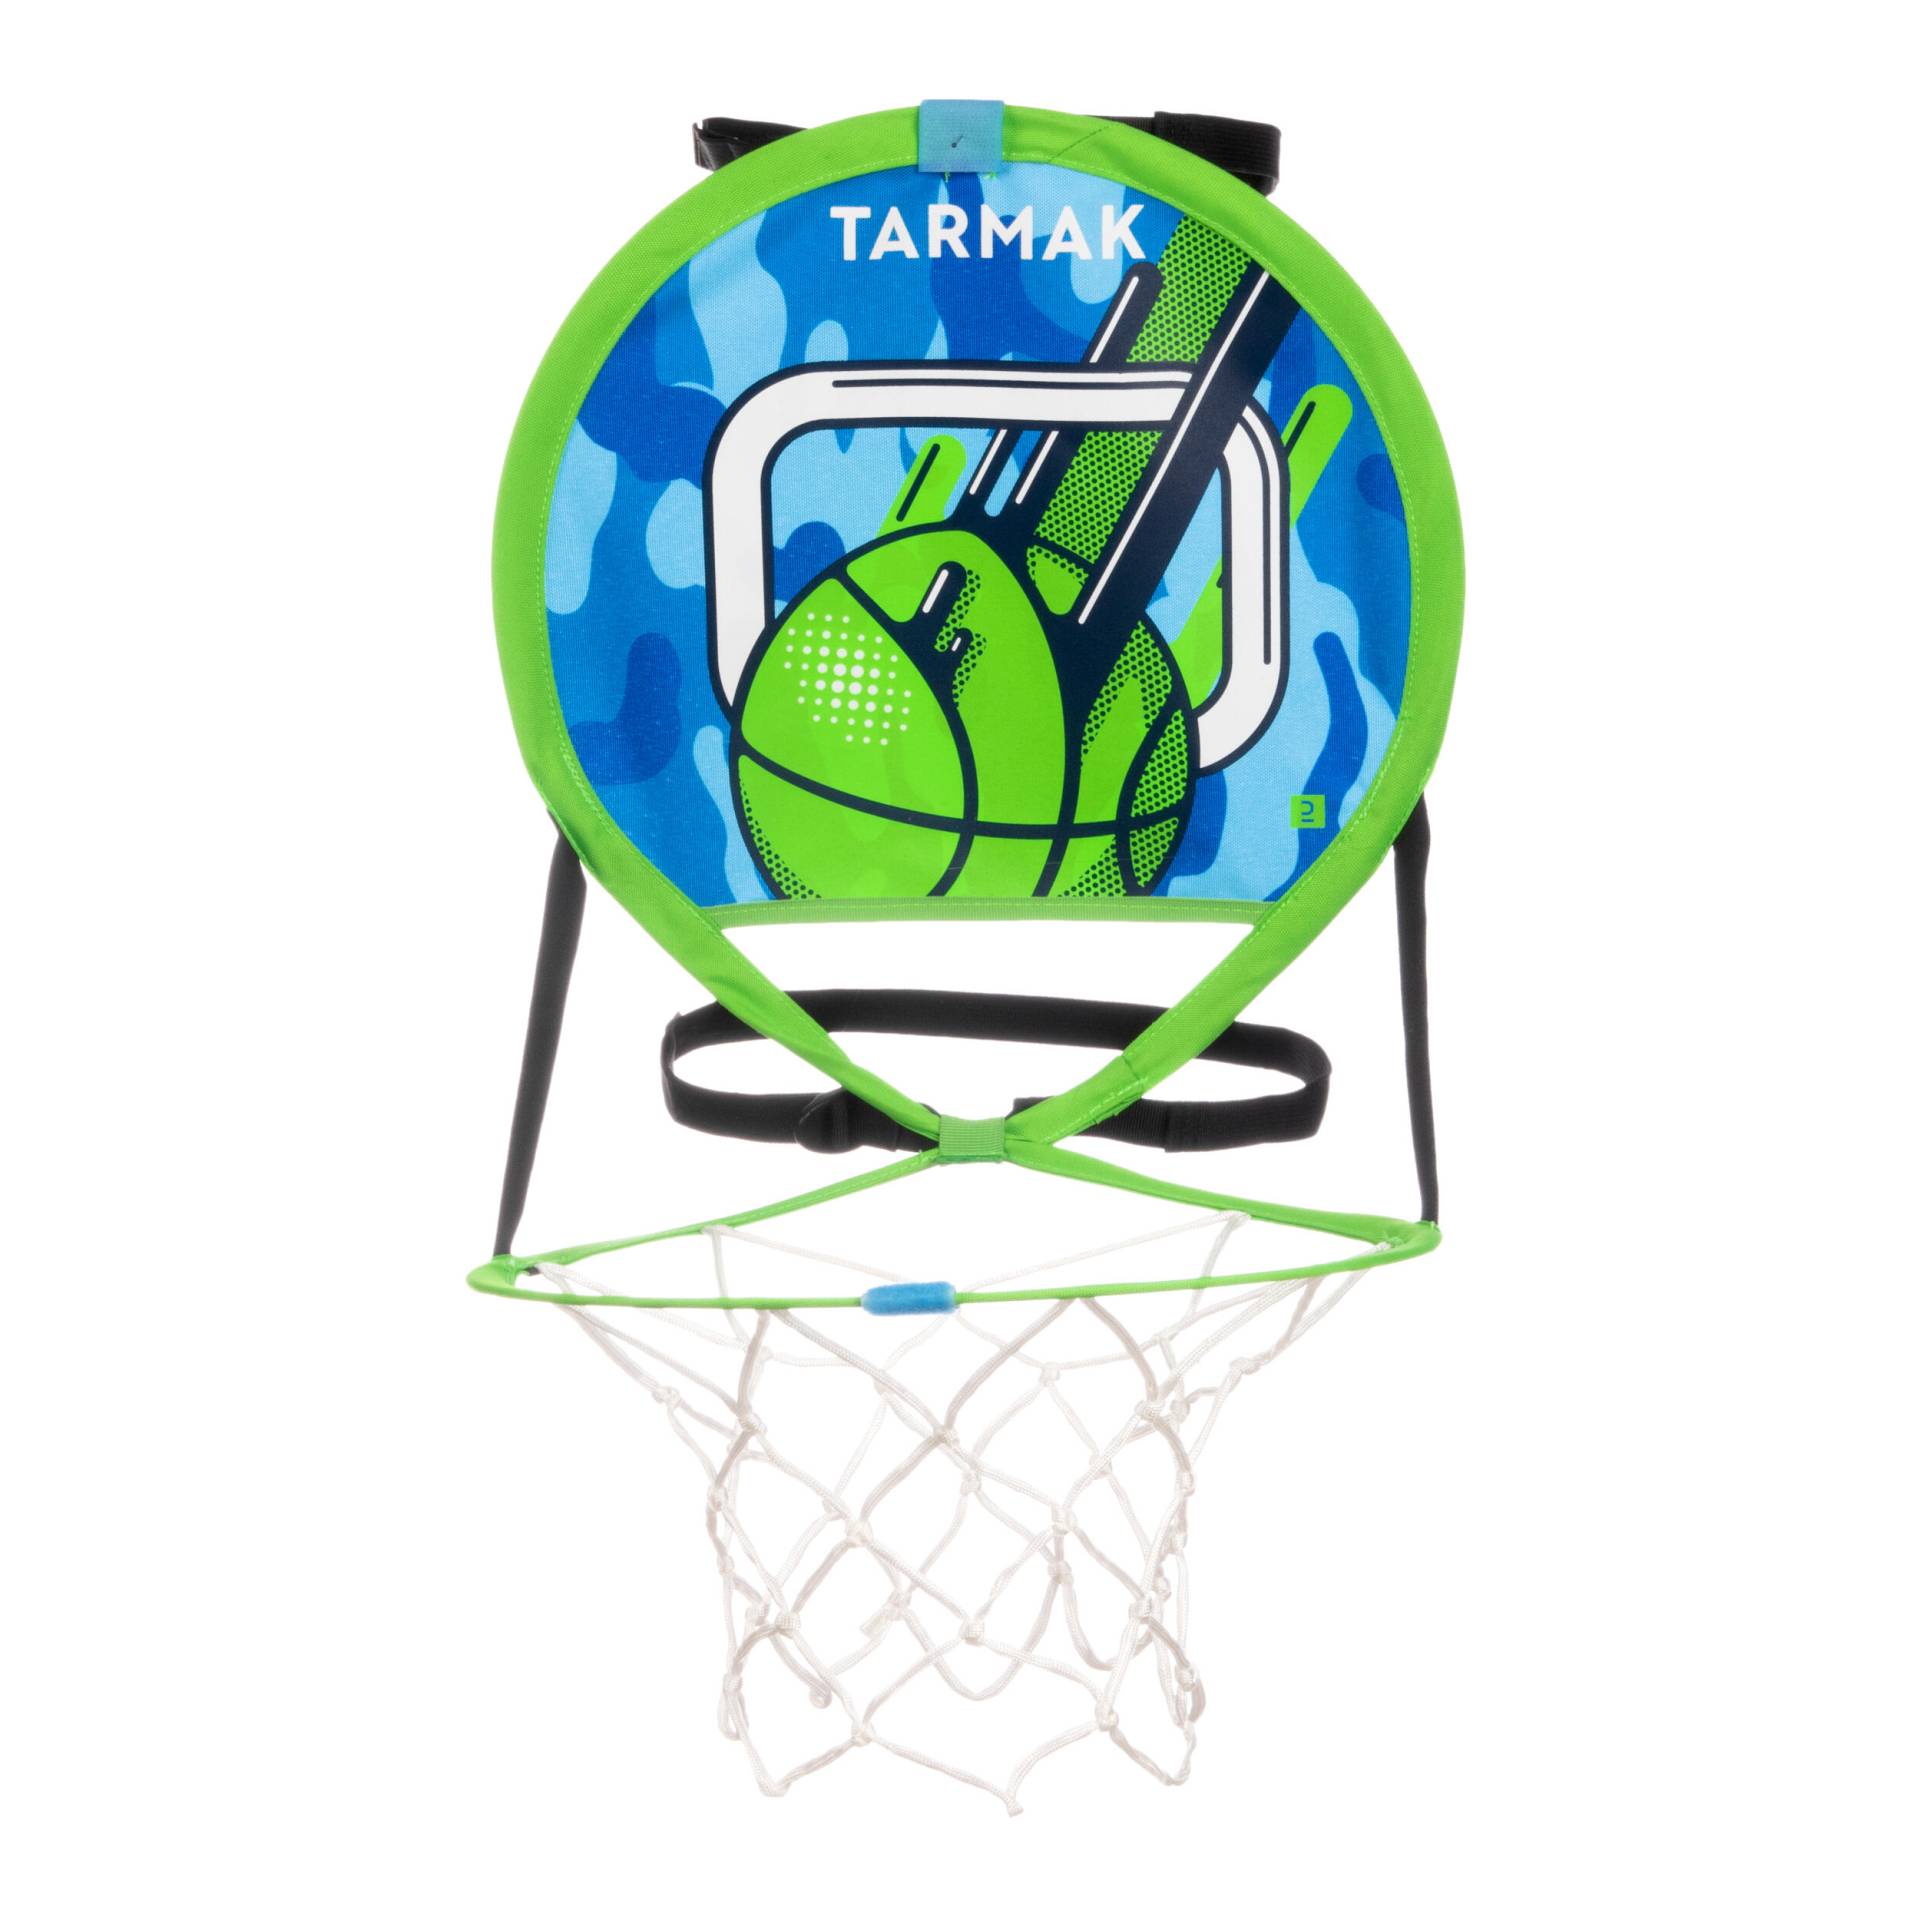 Basketballkorb mobil Hoop 100 Wandbefestigung grün/blau von TARMAK